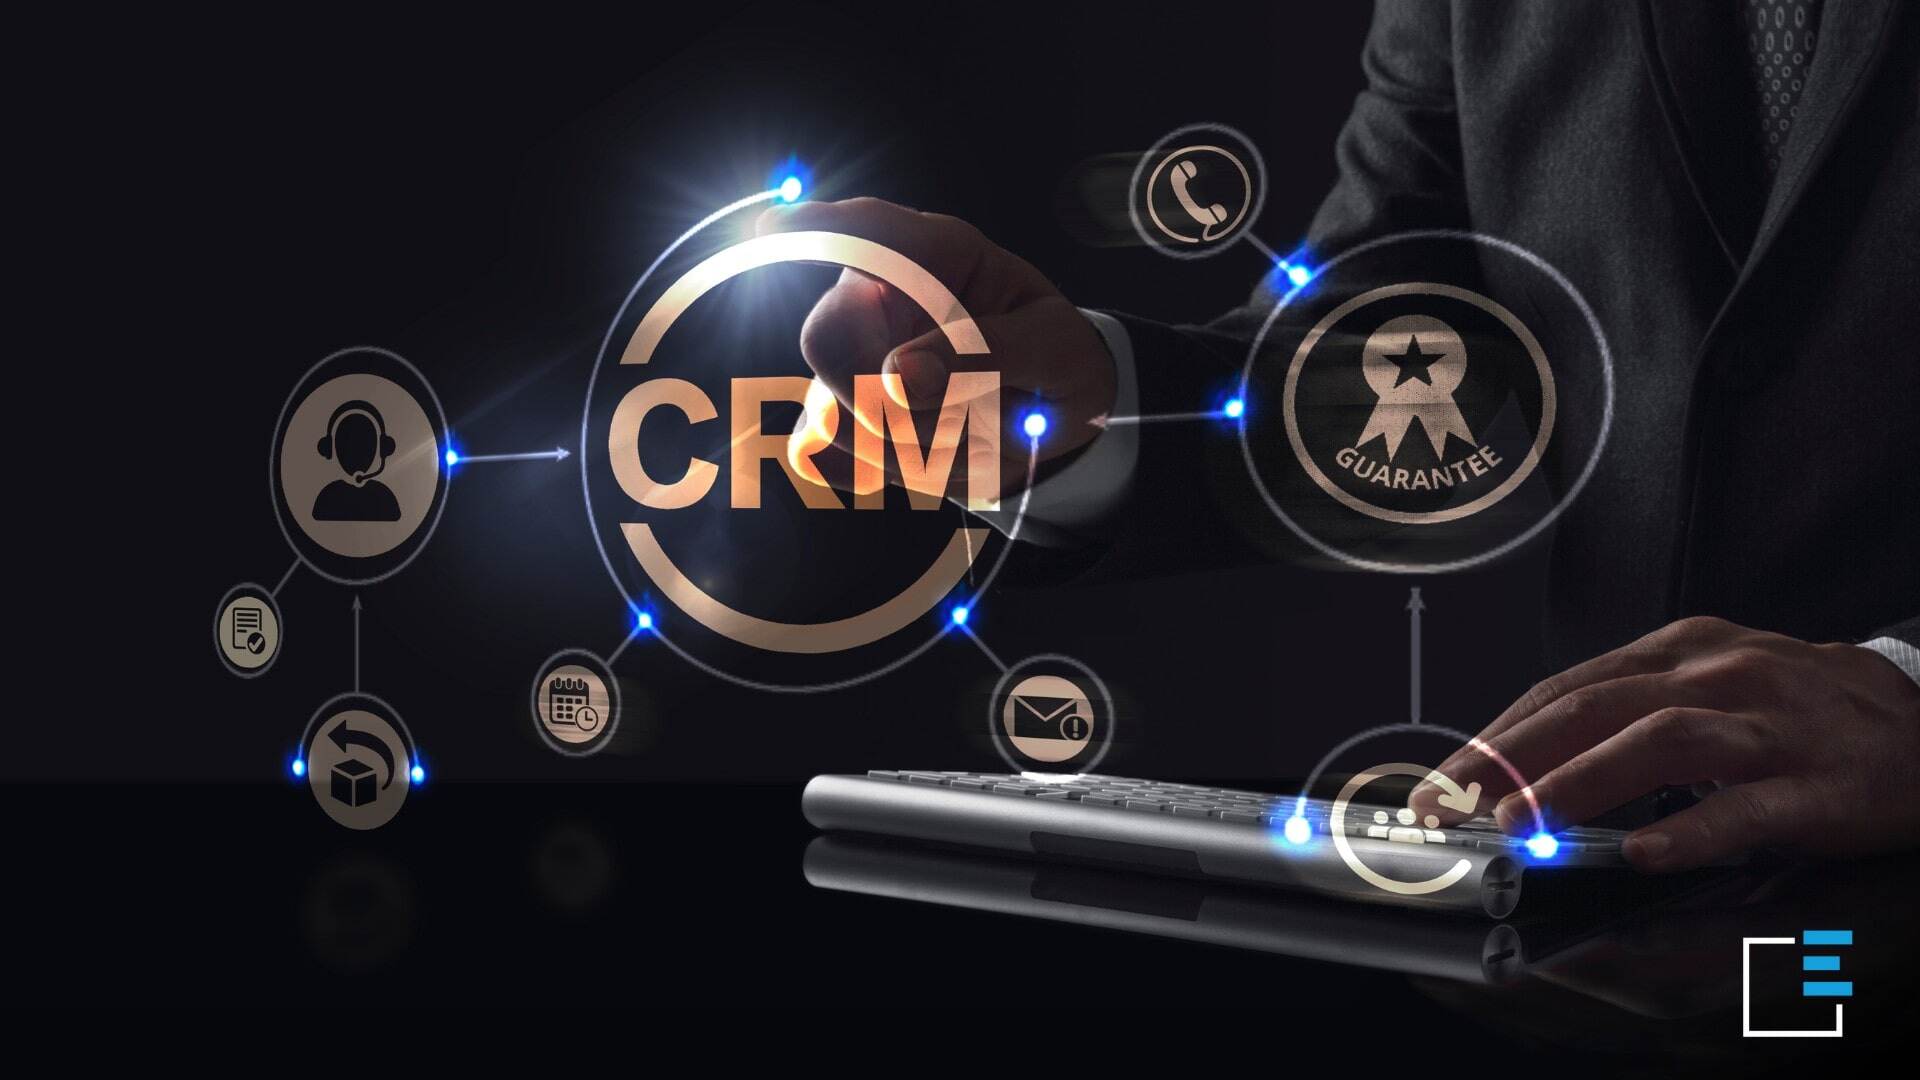 Cloud CRM: how cloud-based management works